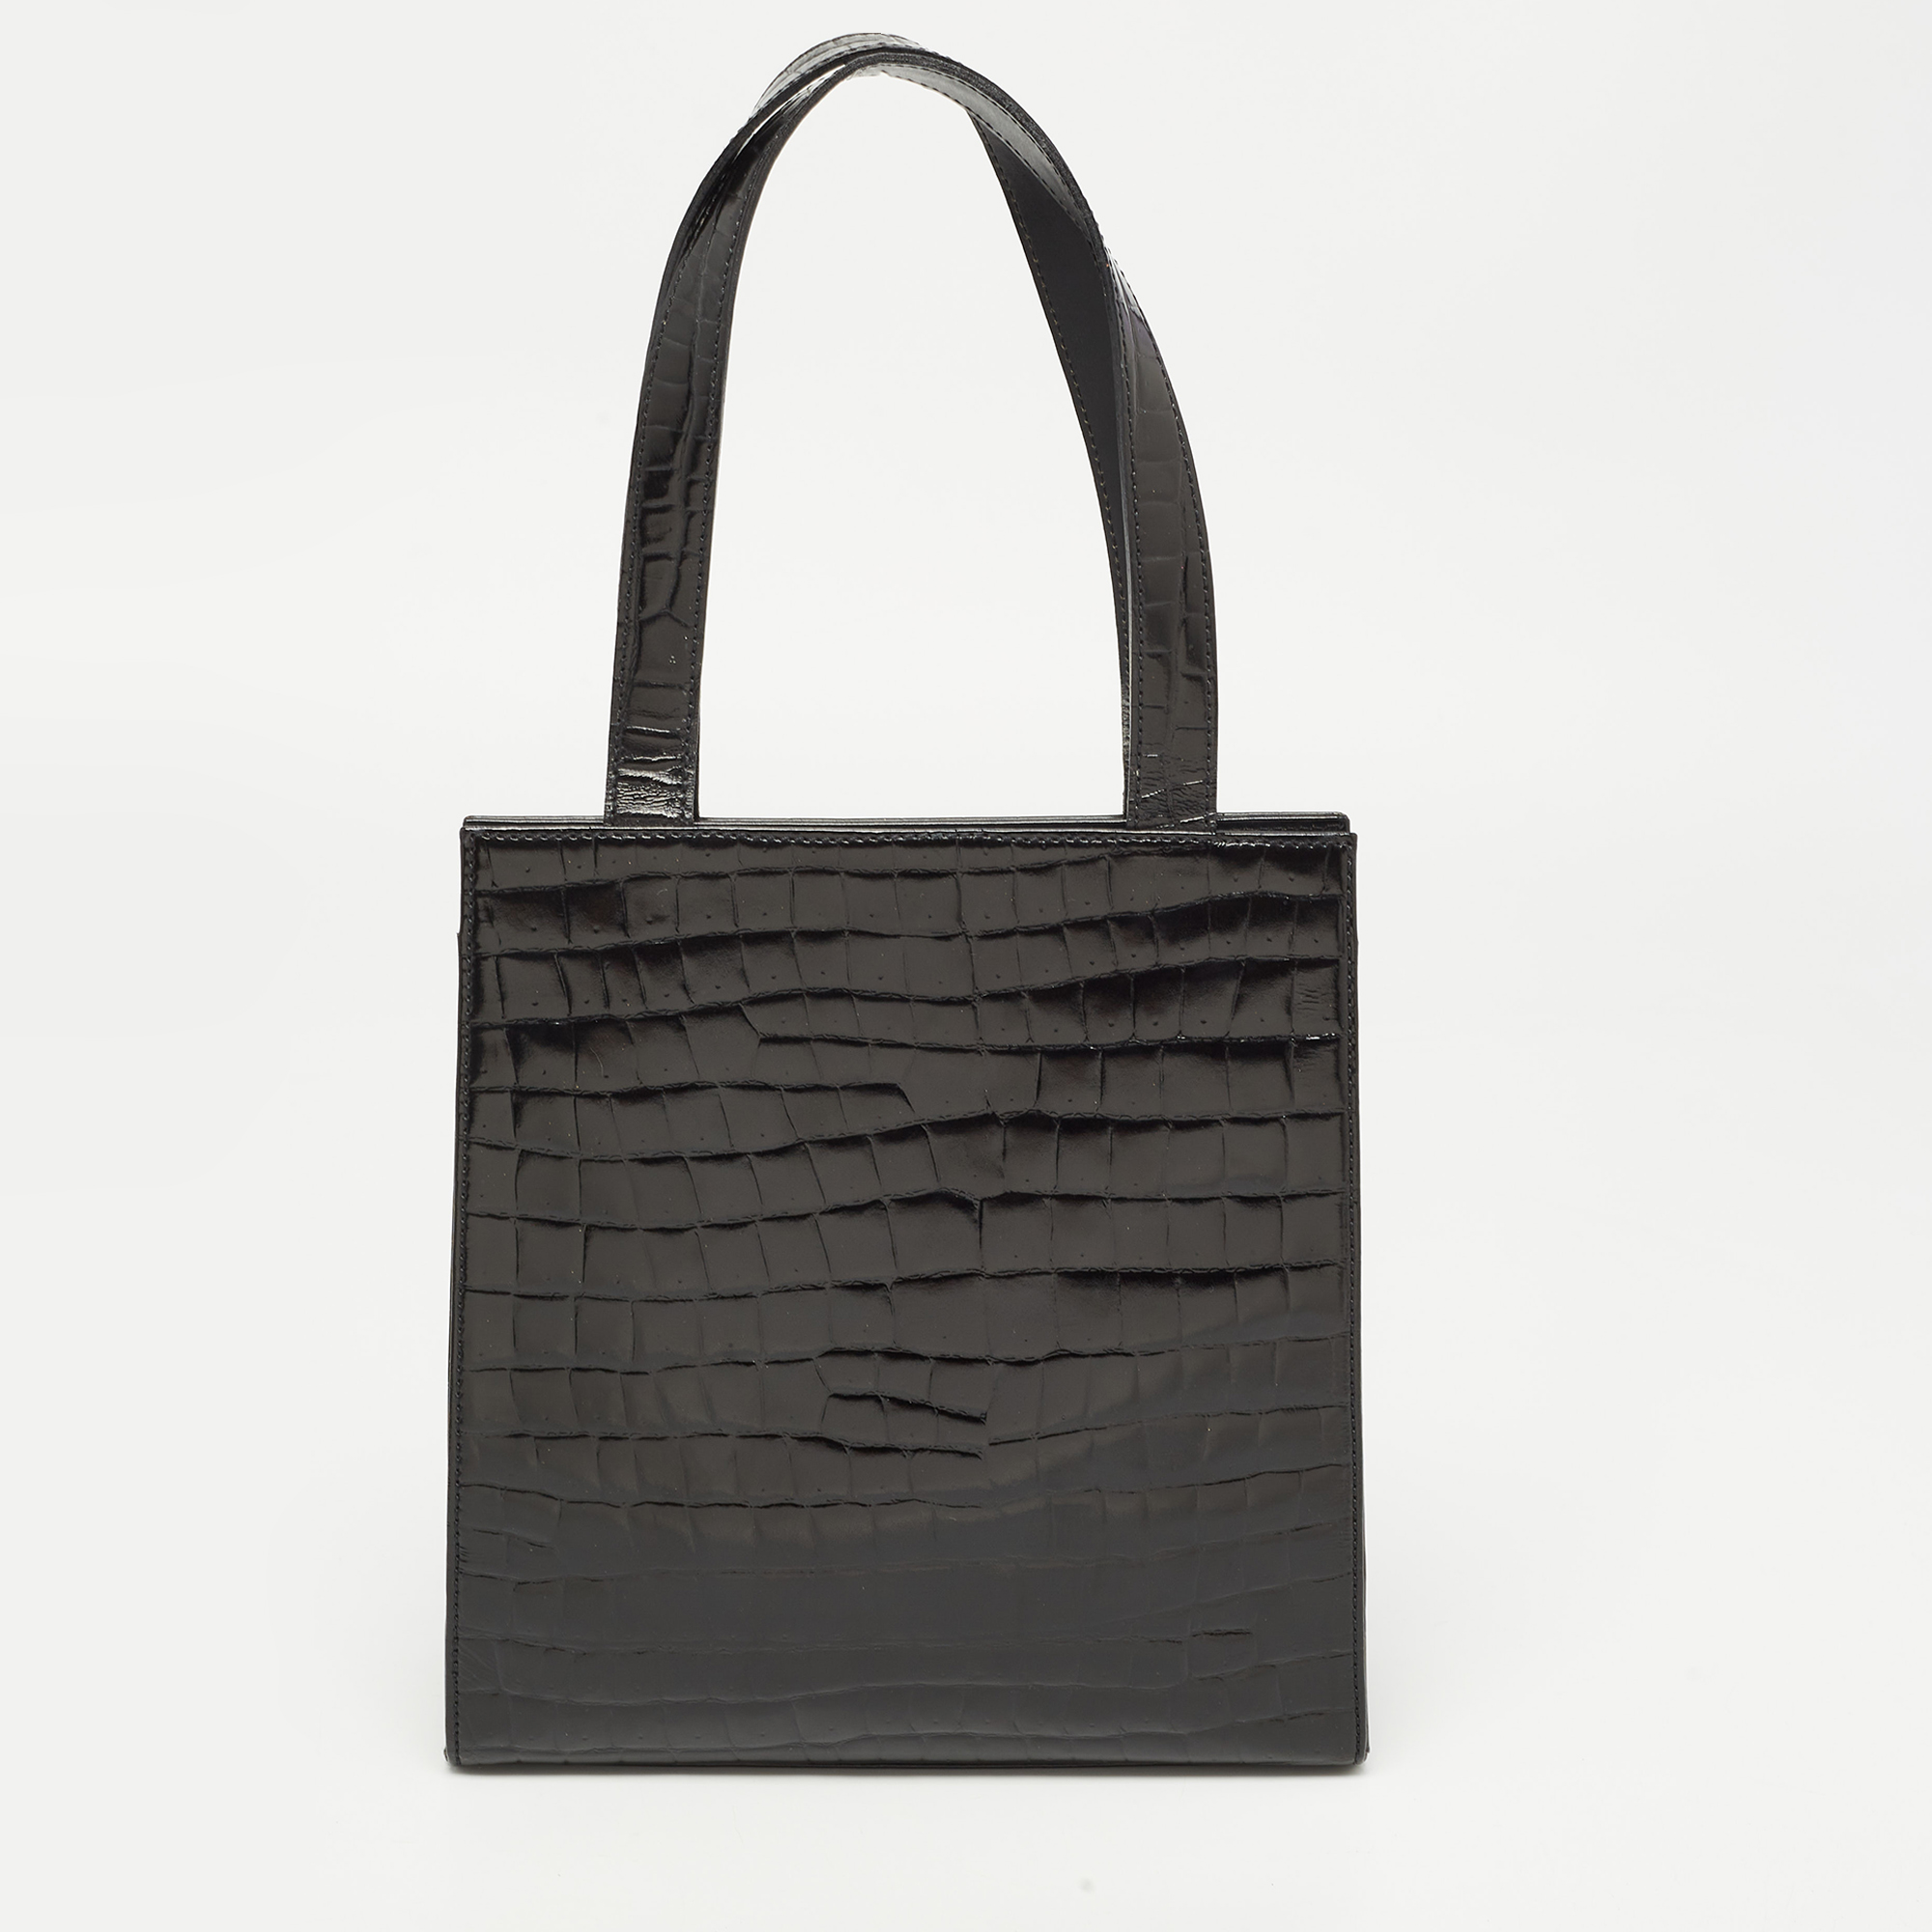 Yves Saint Laurent Black Shine Croc Embossed Leather Tote